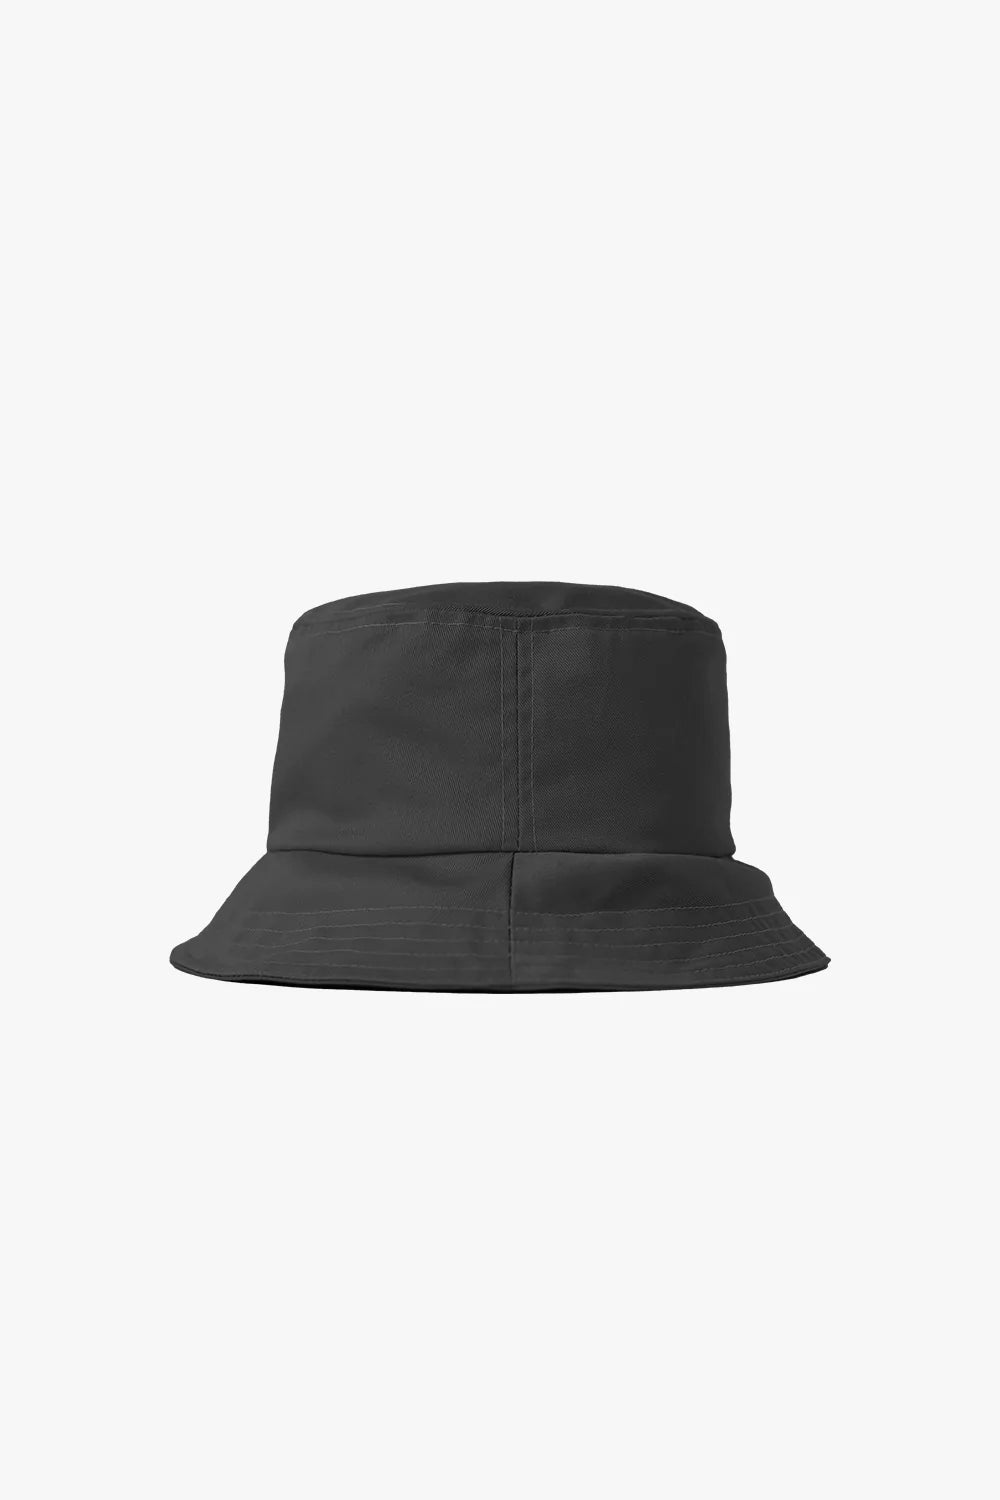 Glory Allan Bucket Hat DIY Kit